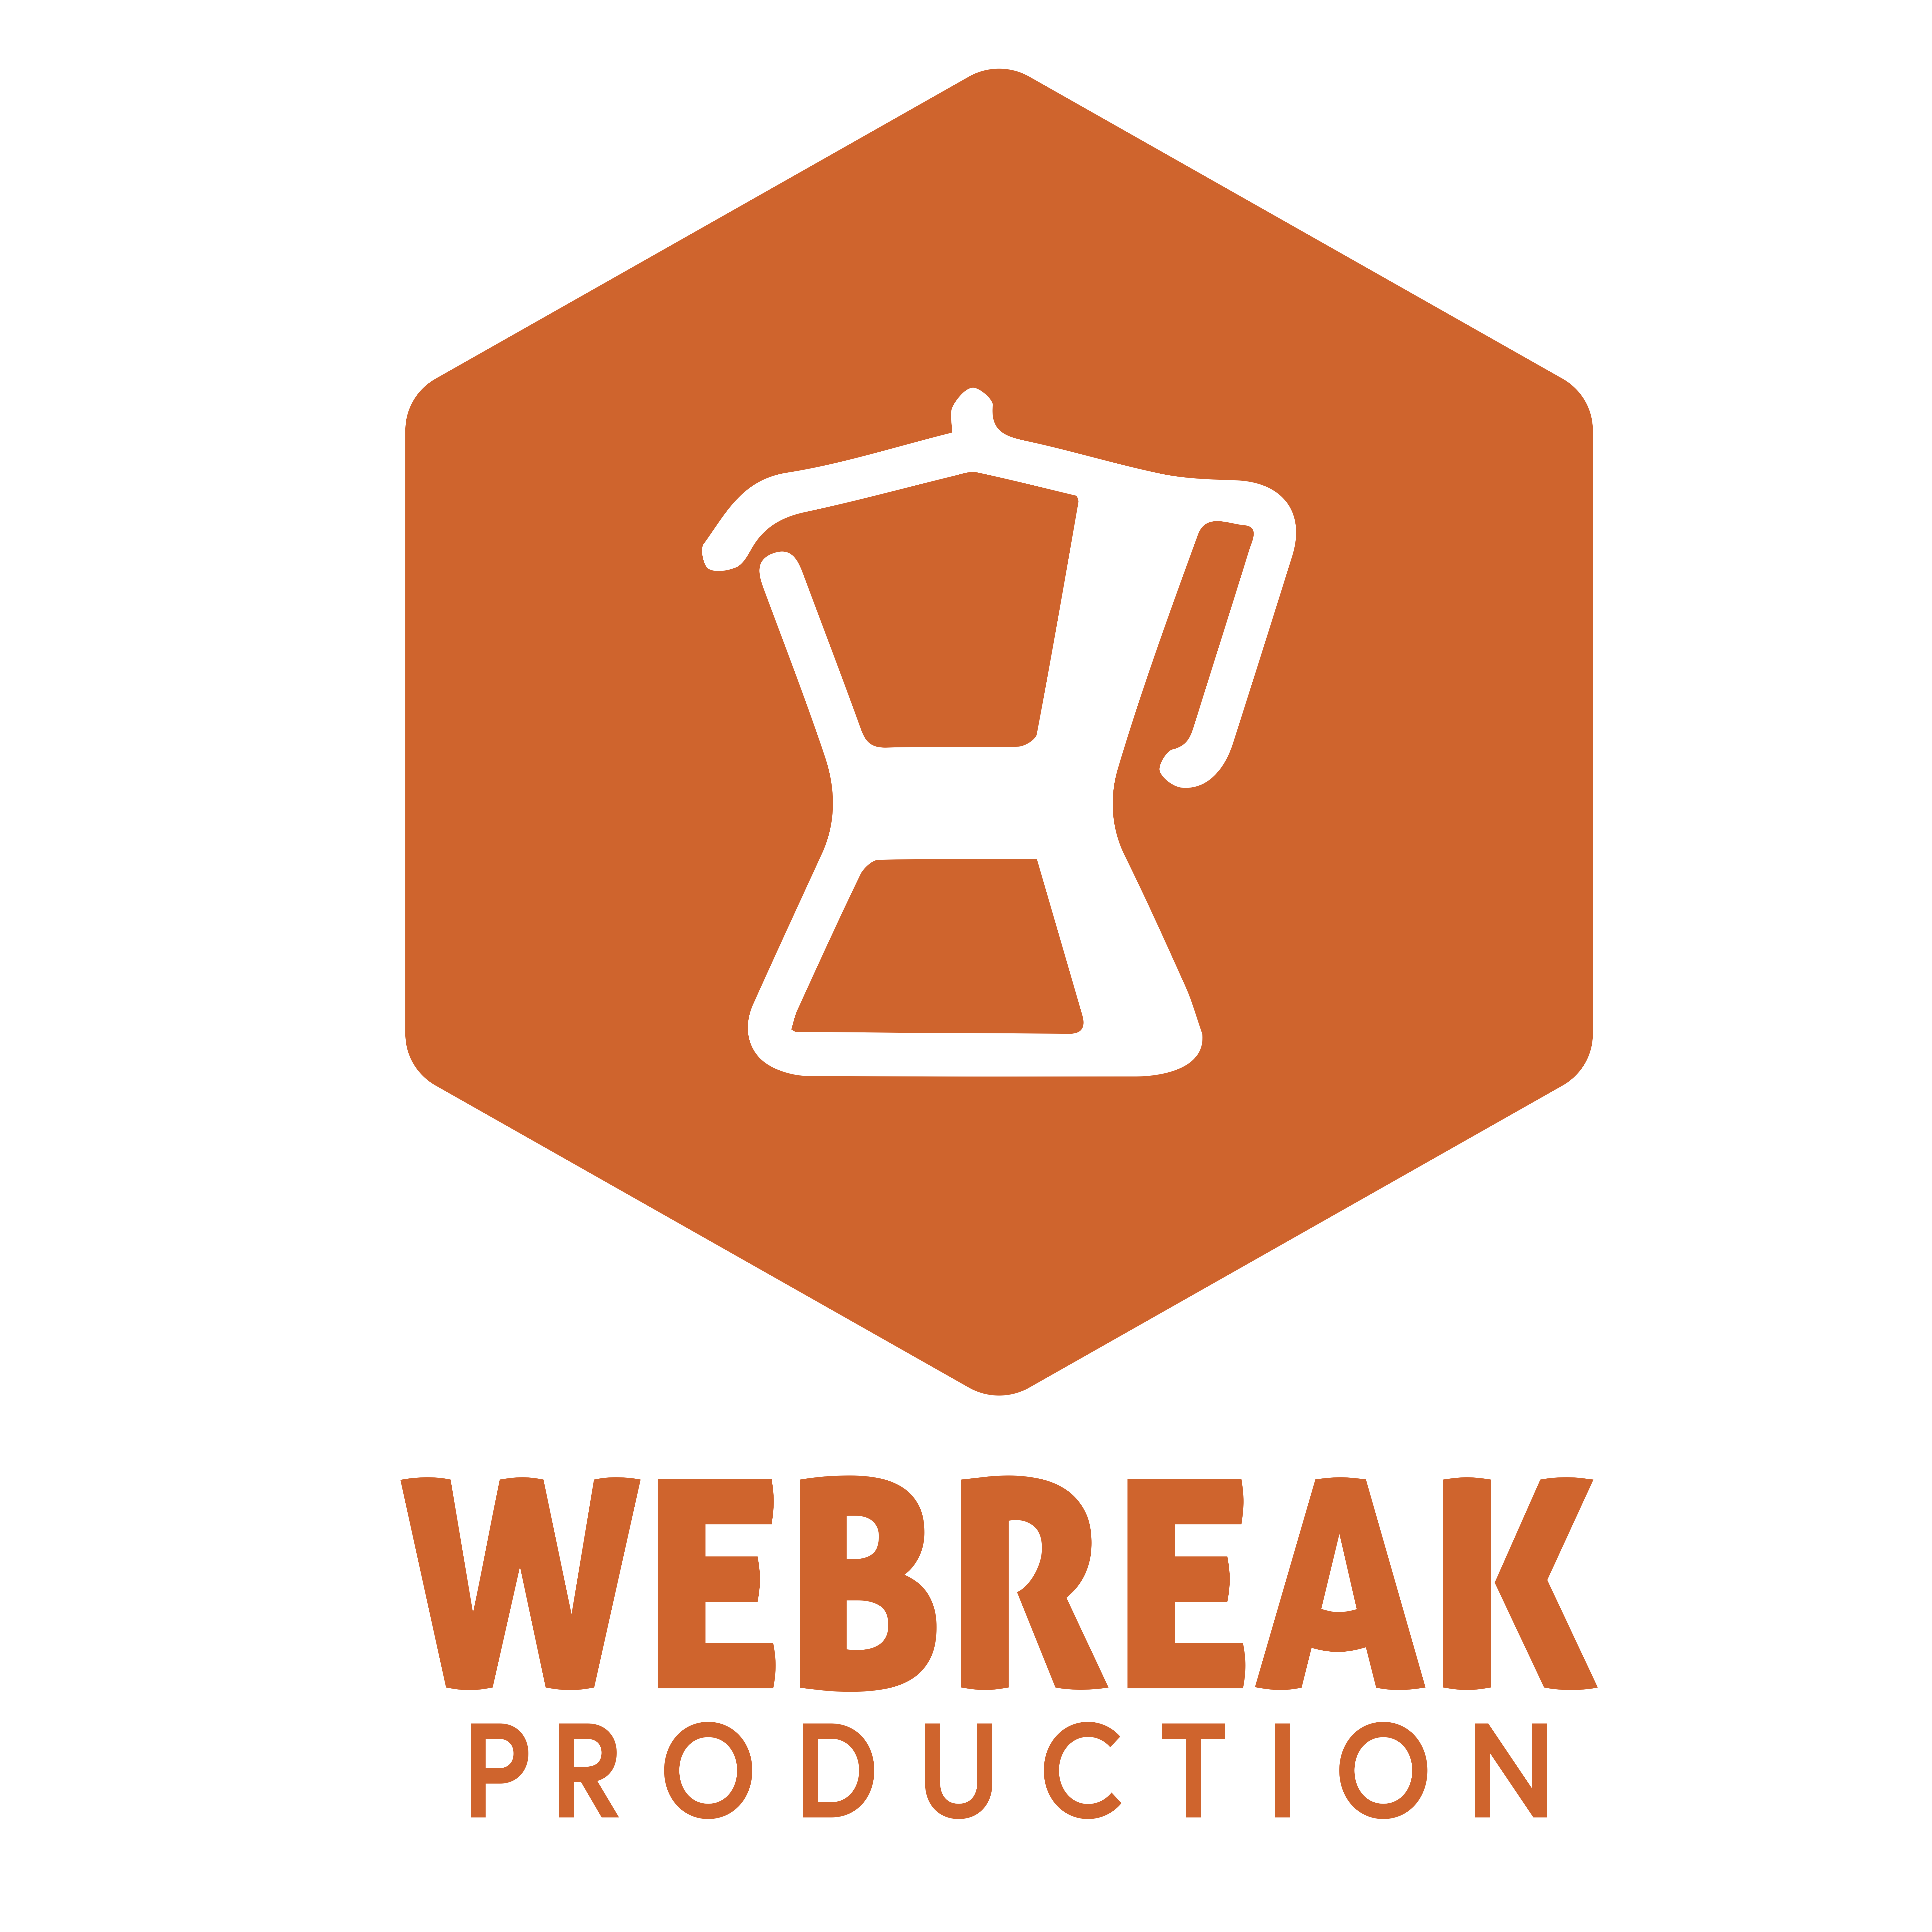 Webreak Production